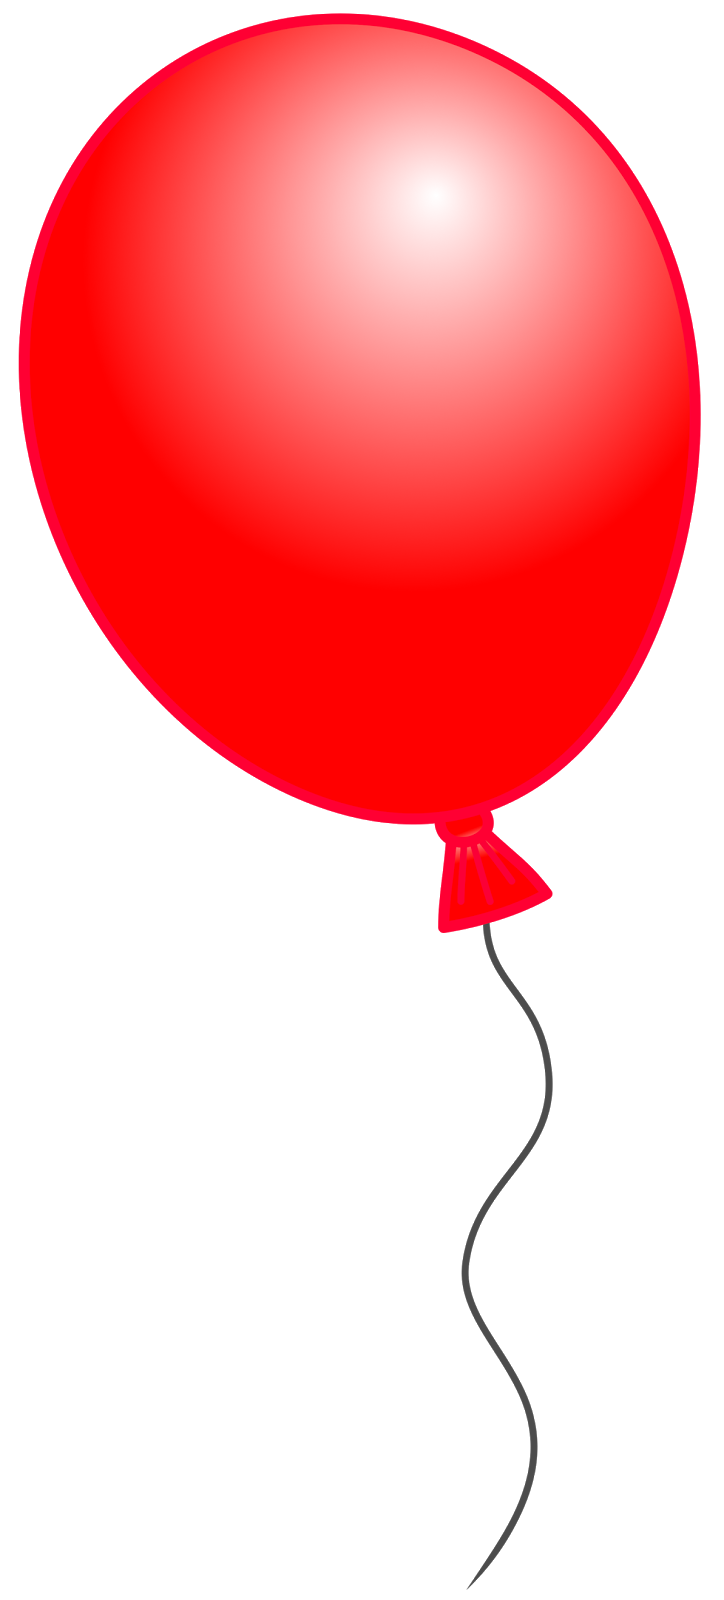 Clip art of balloons